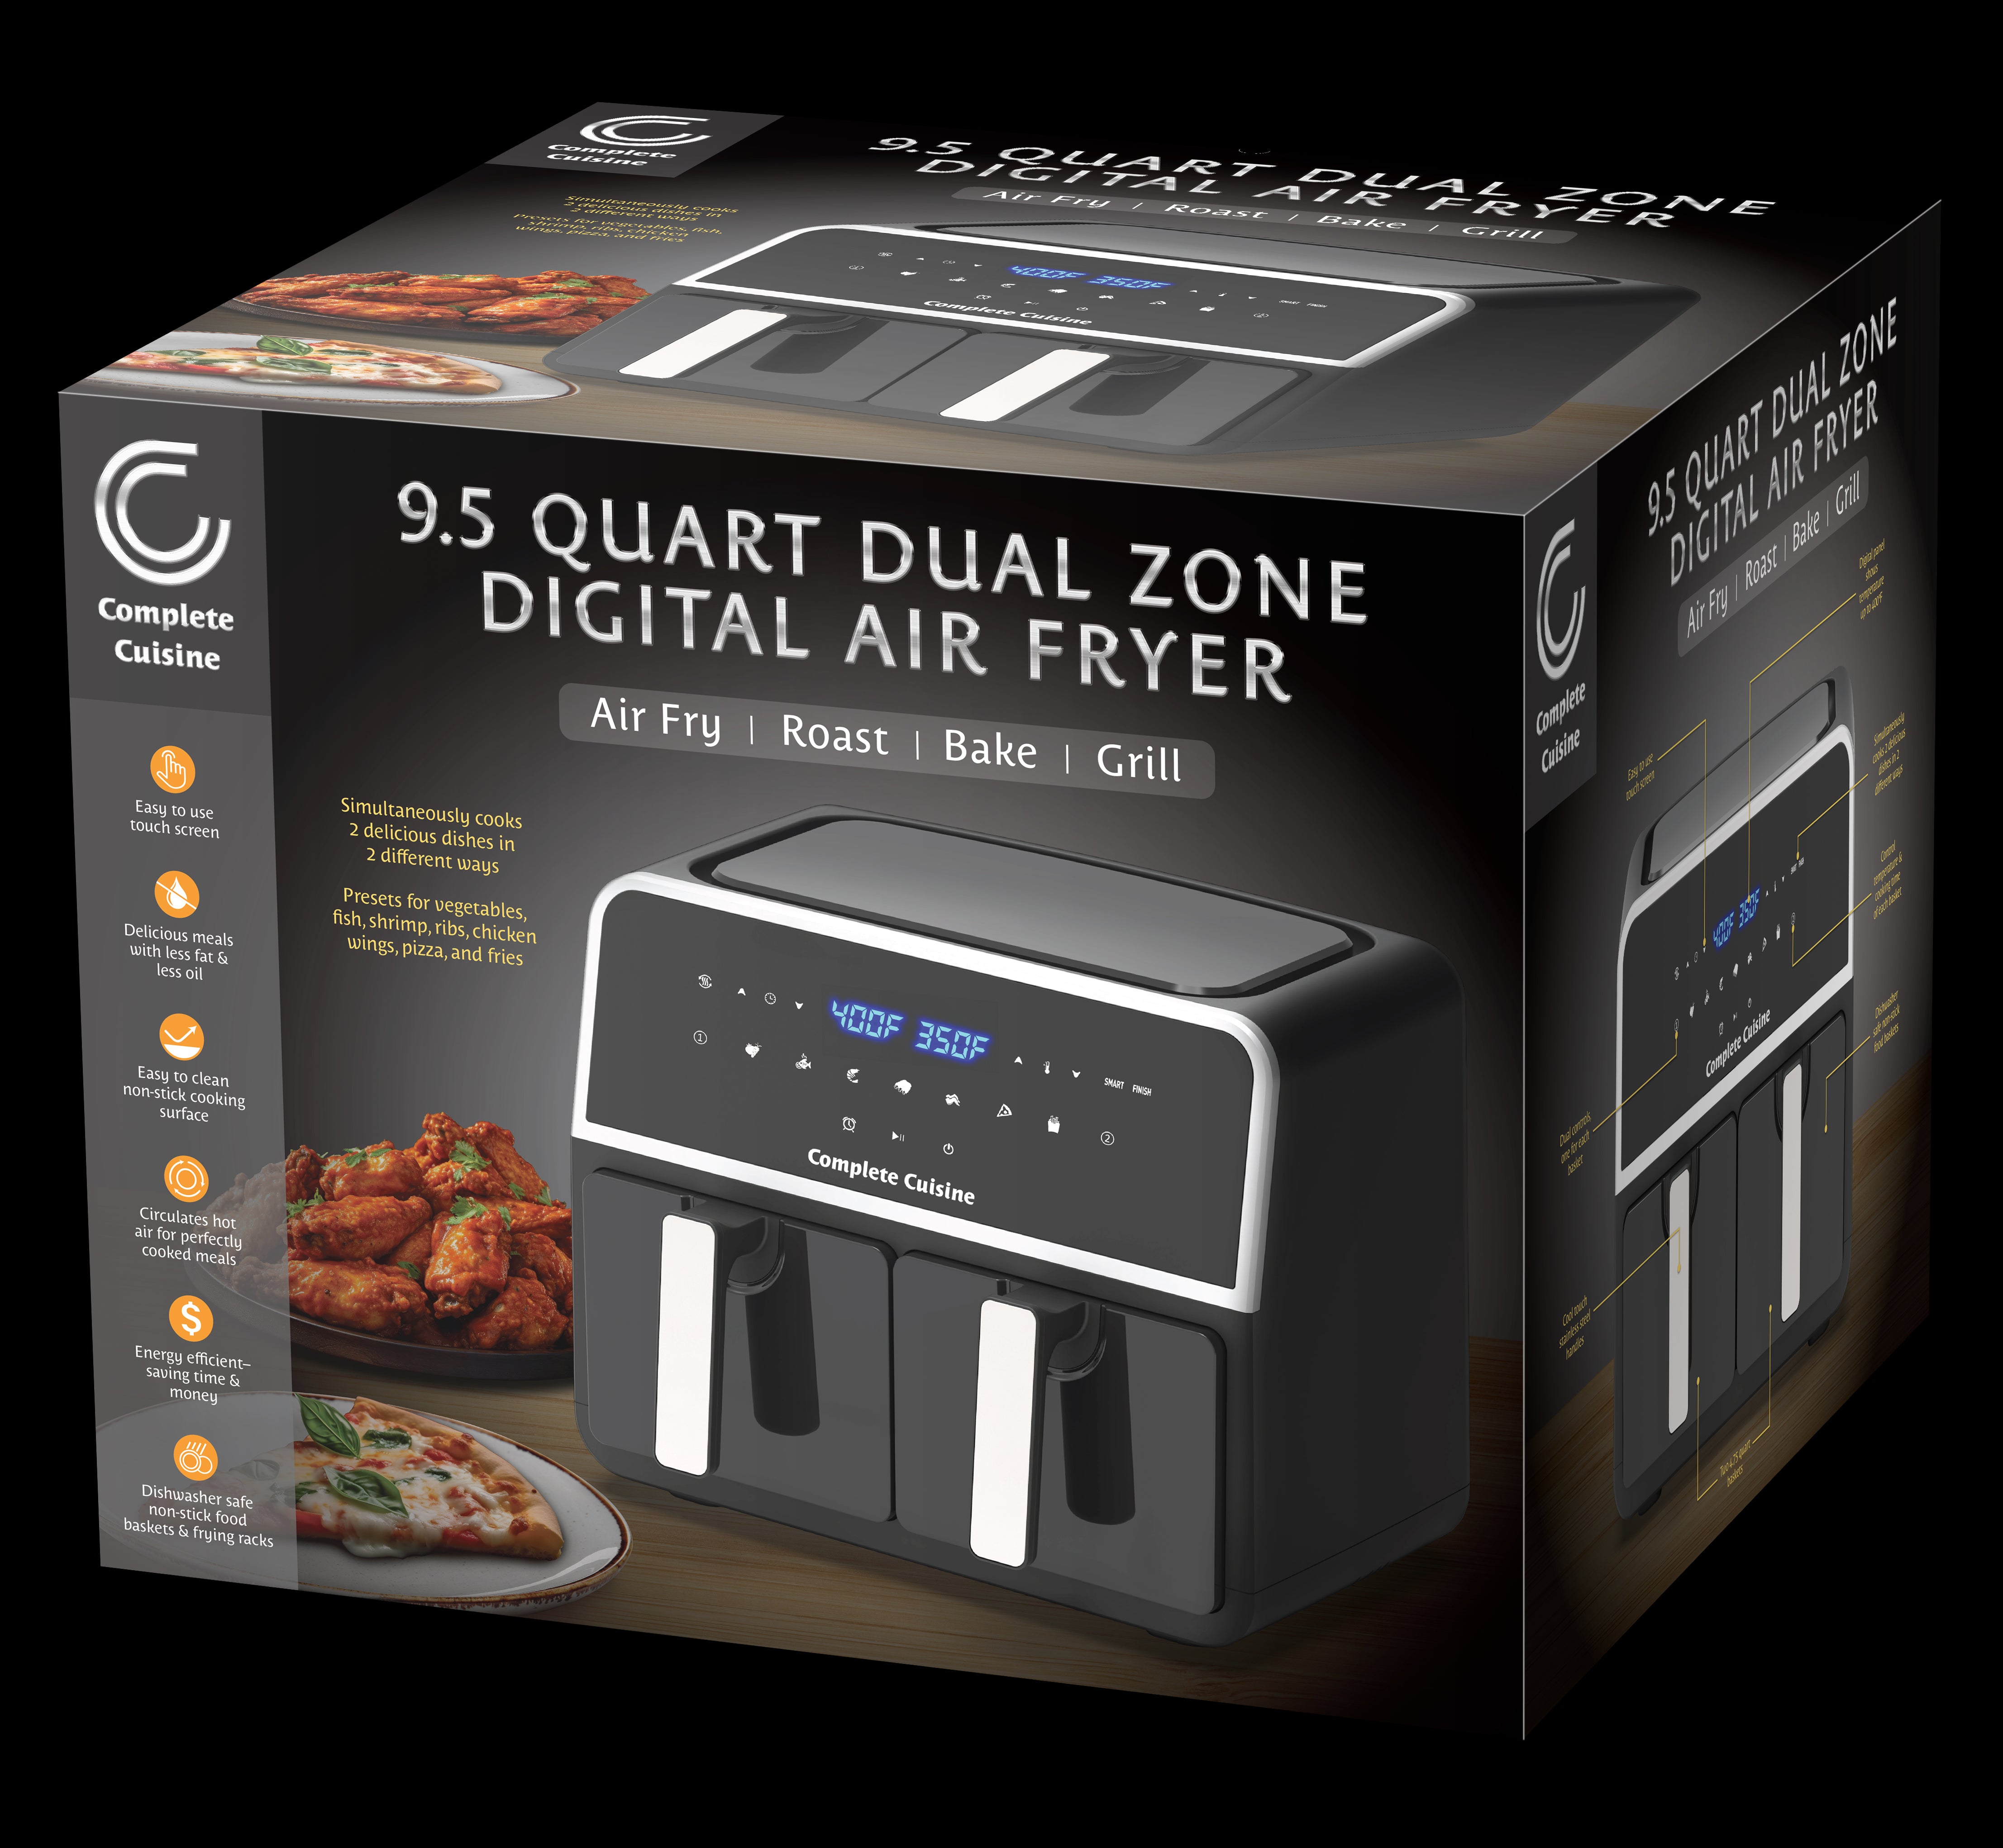 Complete Cuisine 9.5 Quart Dual Zone Digital Air Fryer- Air Fry, Roast, Bake & Grill